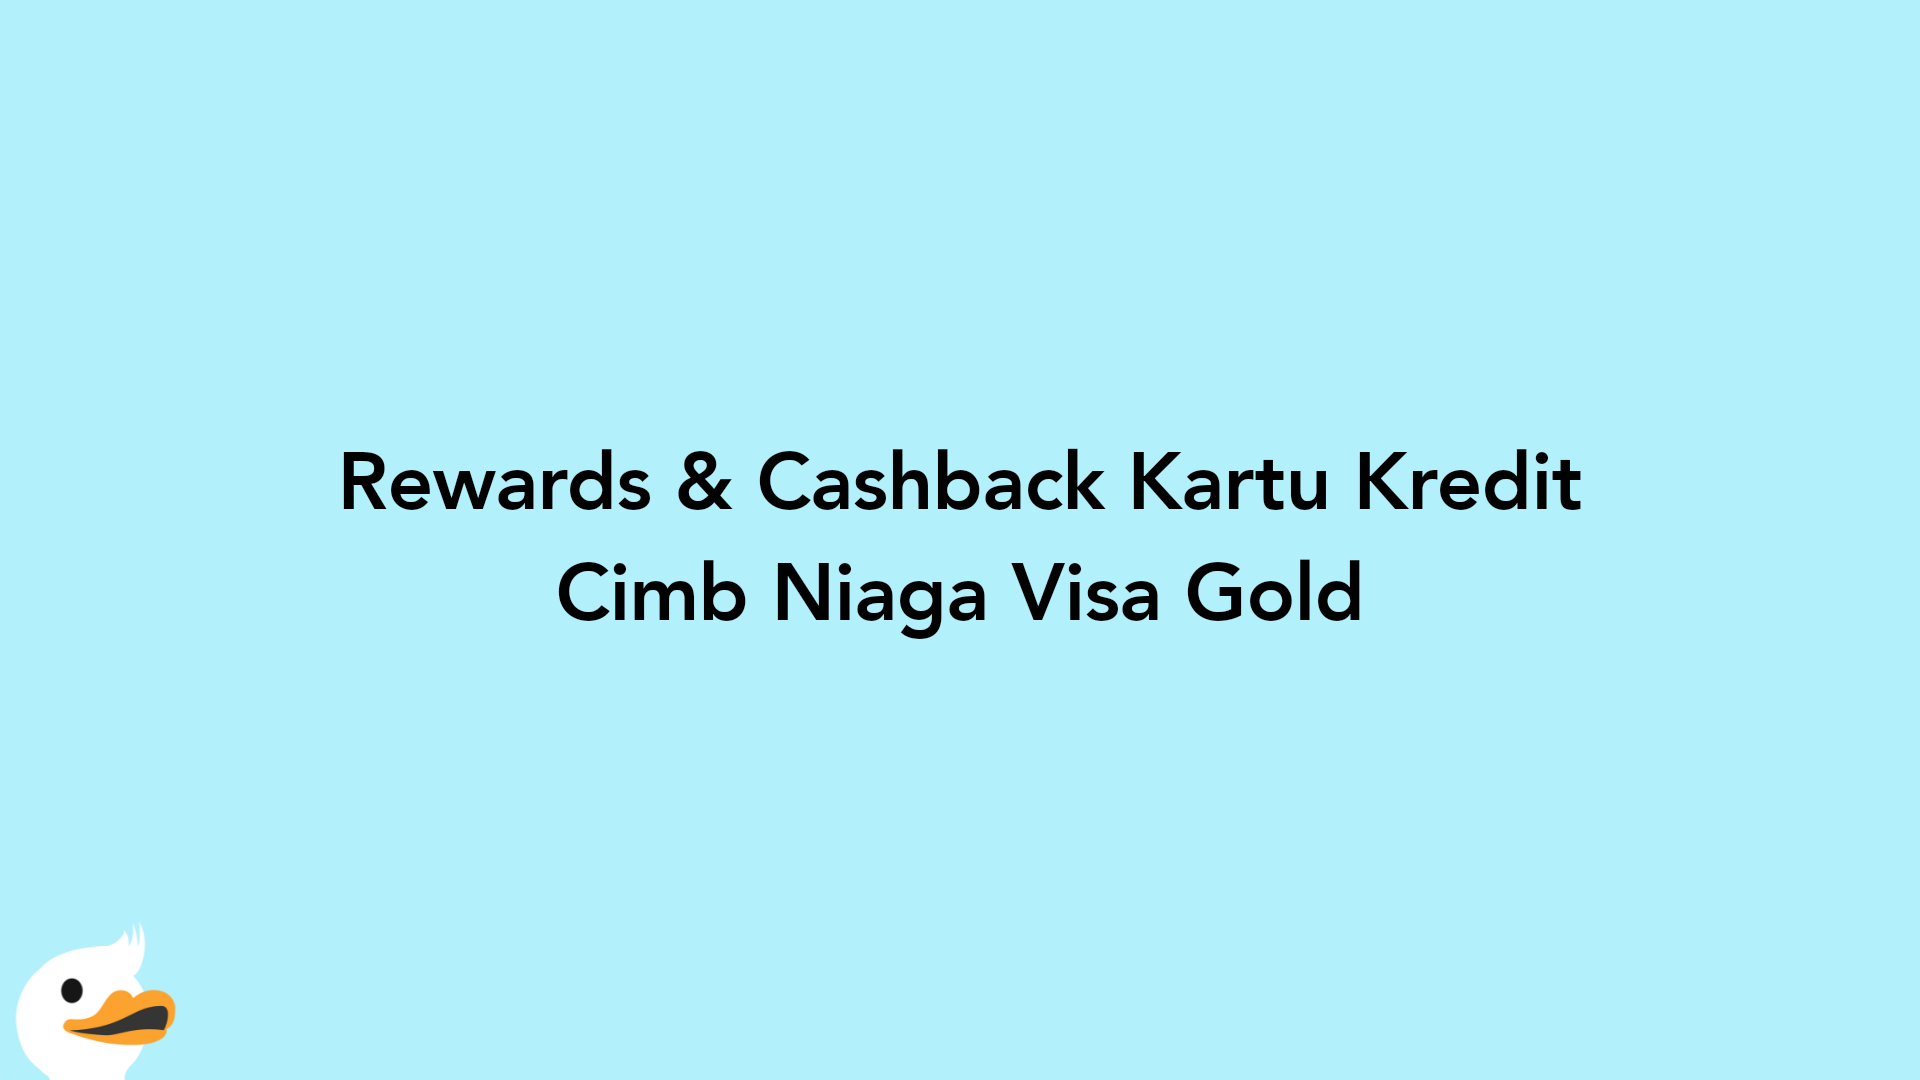 Rewards & Cashback Kartu Kredit Cimb Niaga Visa Gold